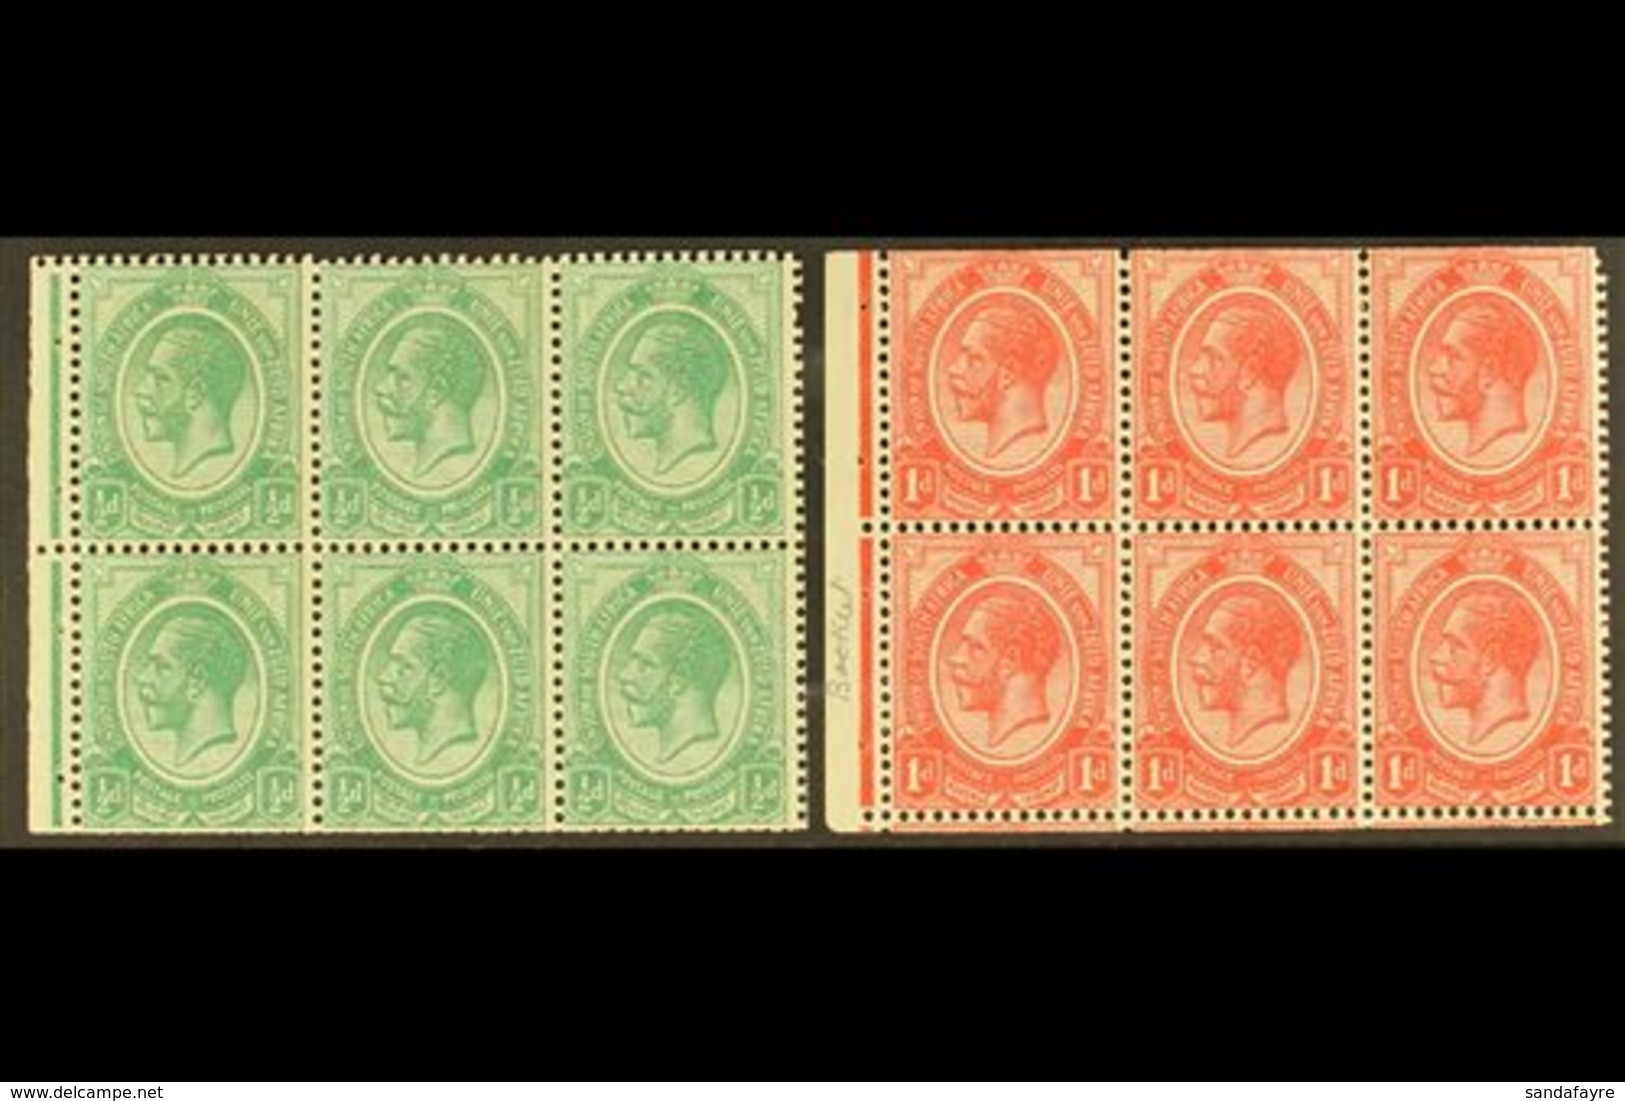 \Y BOOKLET PANES\Y 1913-20 ½d & 1d Panes, Wmk Inverted, SG 3/4, Fine Mint, Trimmed Perfs (2 Panes). For More Images, Ple - Unclassified